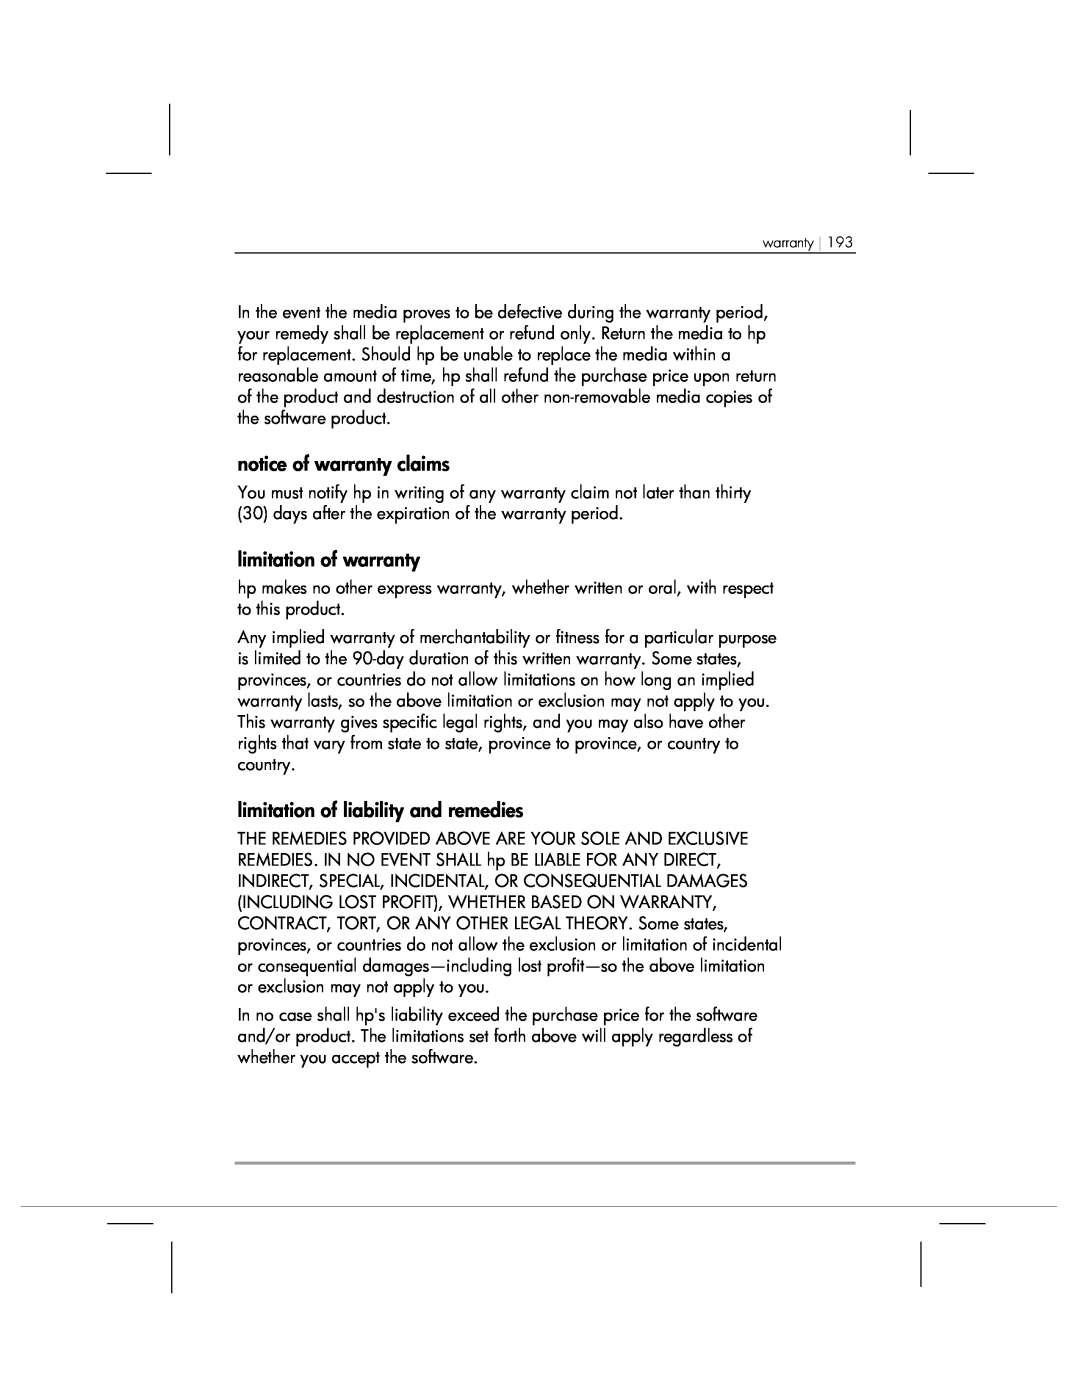 HP 920 manual notice of warranty claims, limitation of warranty, limitation of liability and remedies 